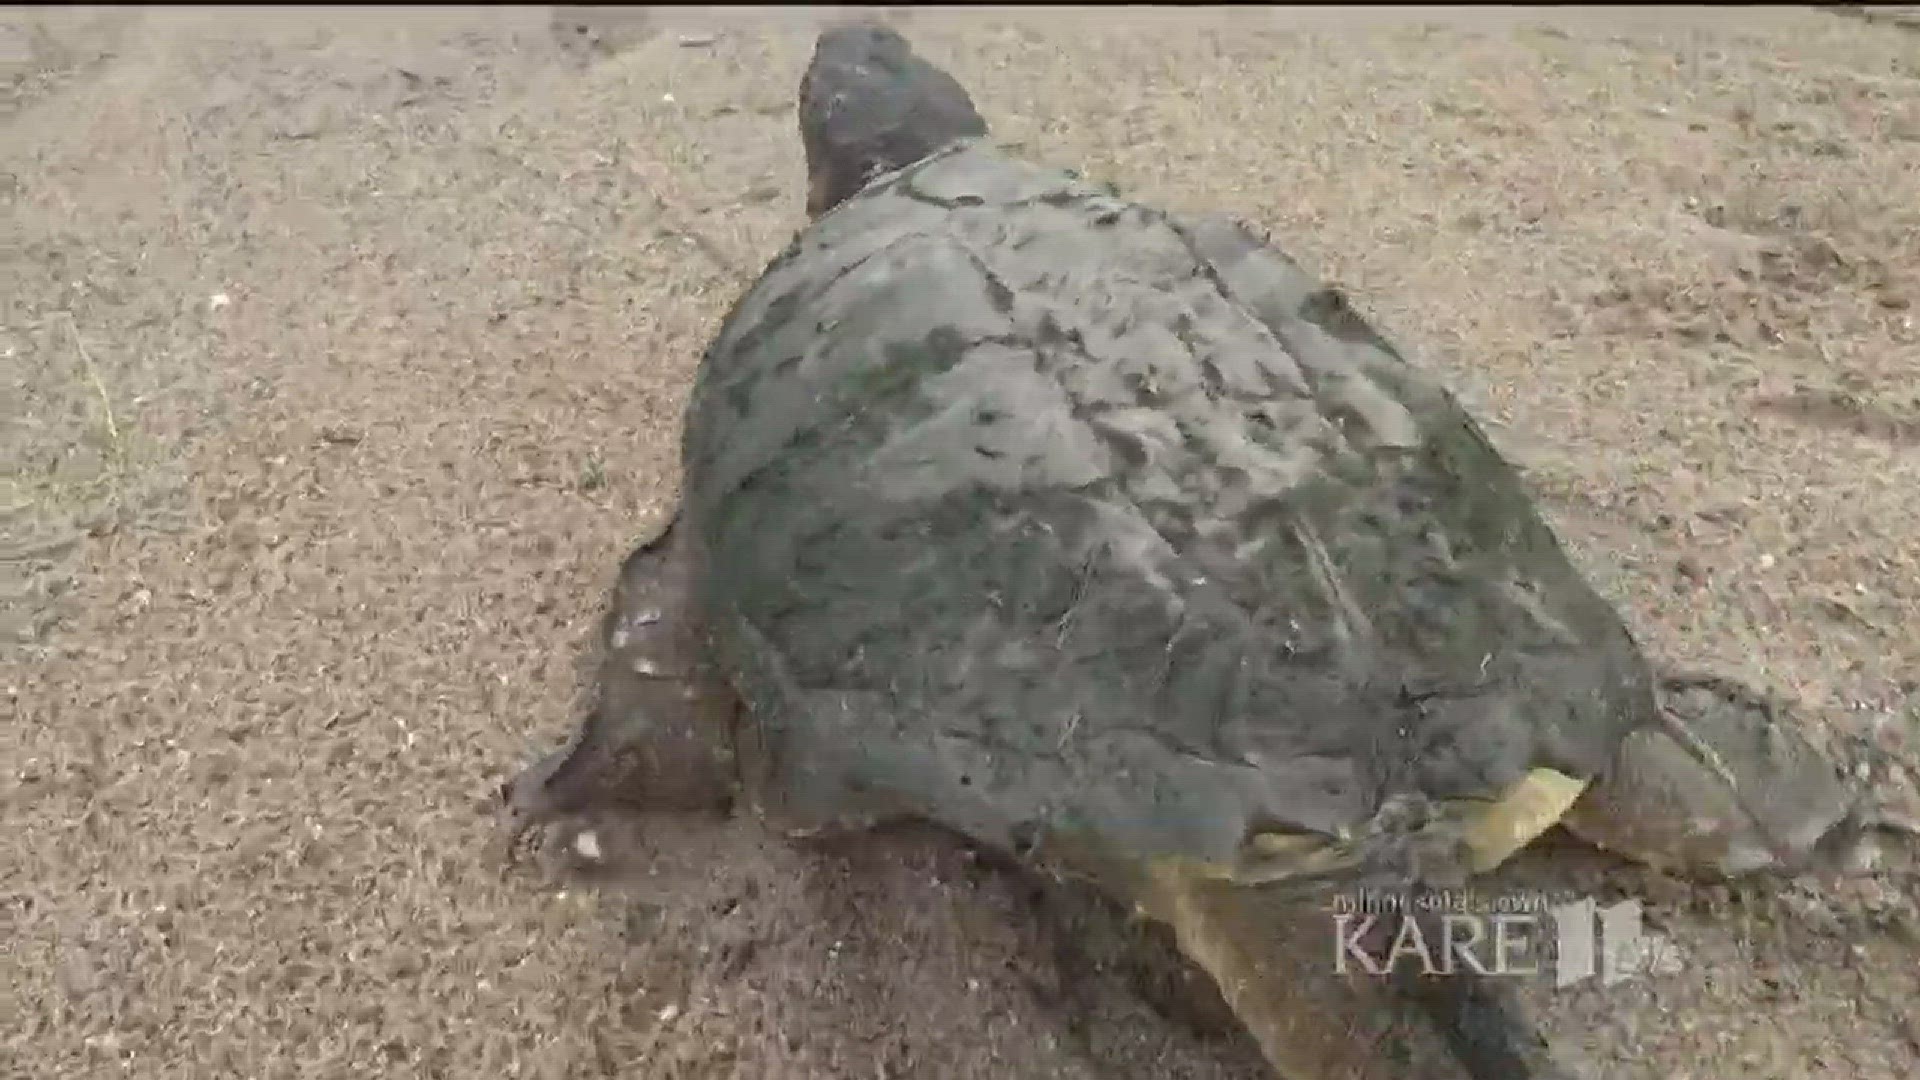 Turtle study progress on Medicine Lake